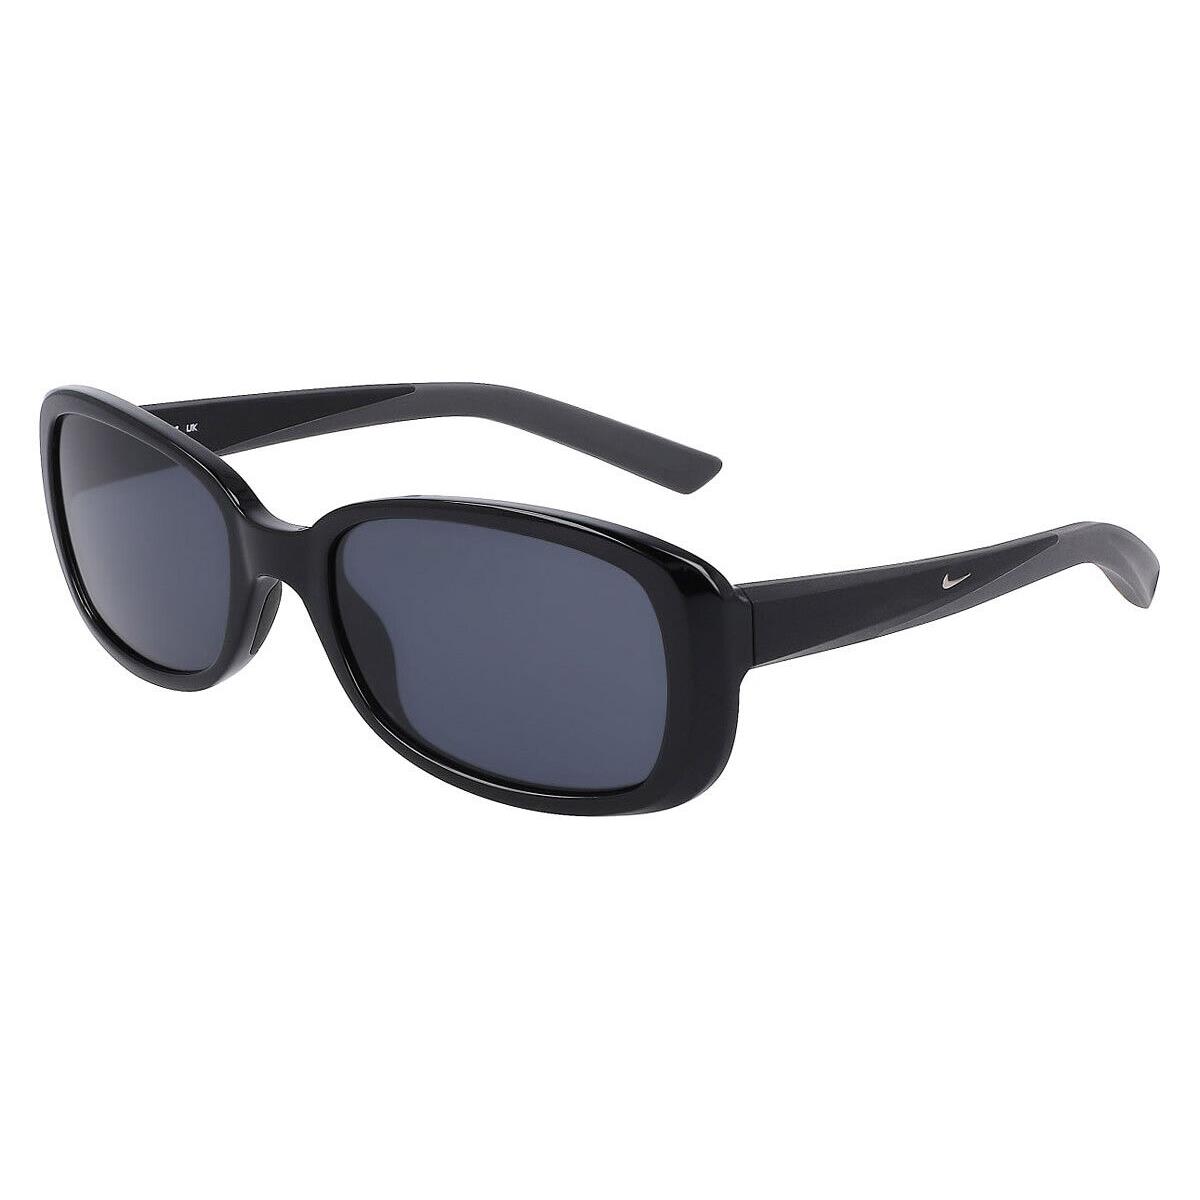 Nike Epic Breeze S FD1881 Sunglasses Black Dark Gray 52mm - Frame: Black / Dark Gray, Lens: Dark Gray